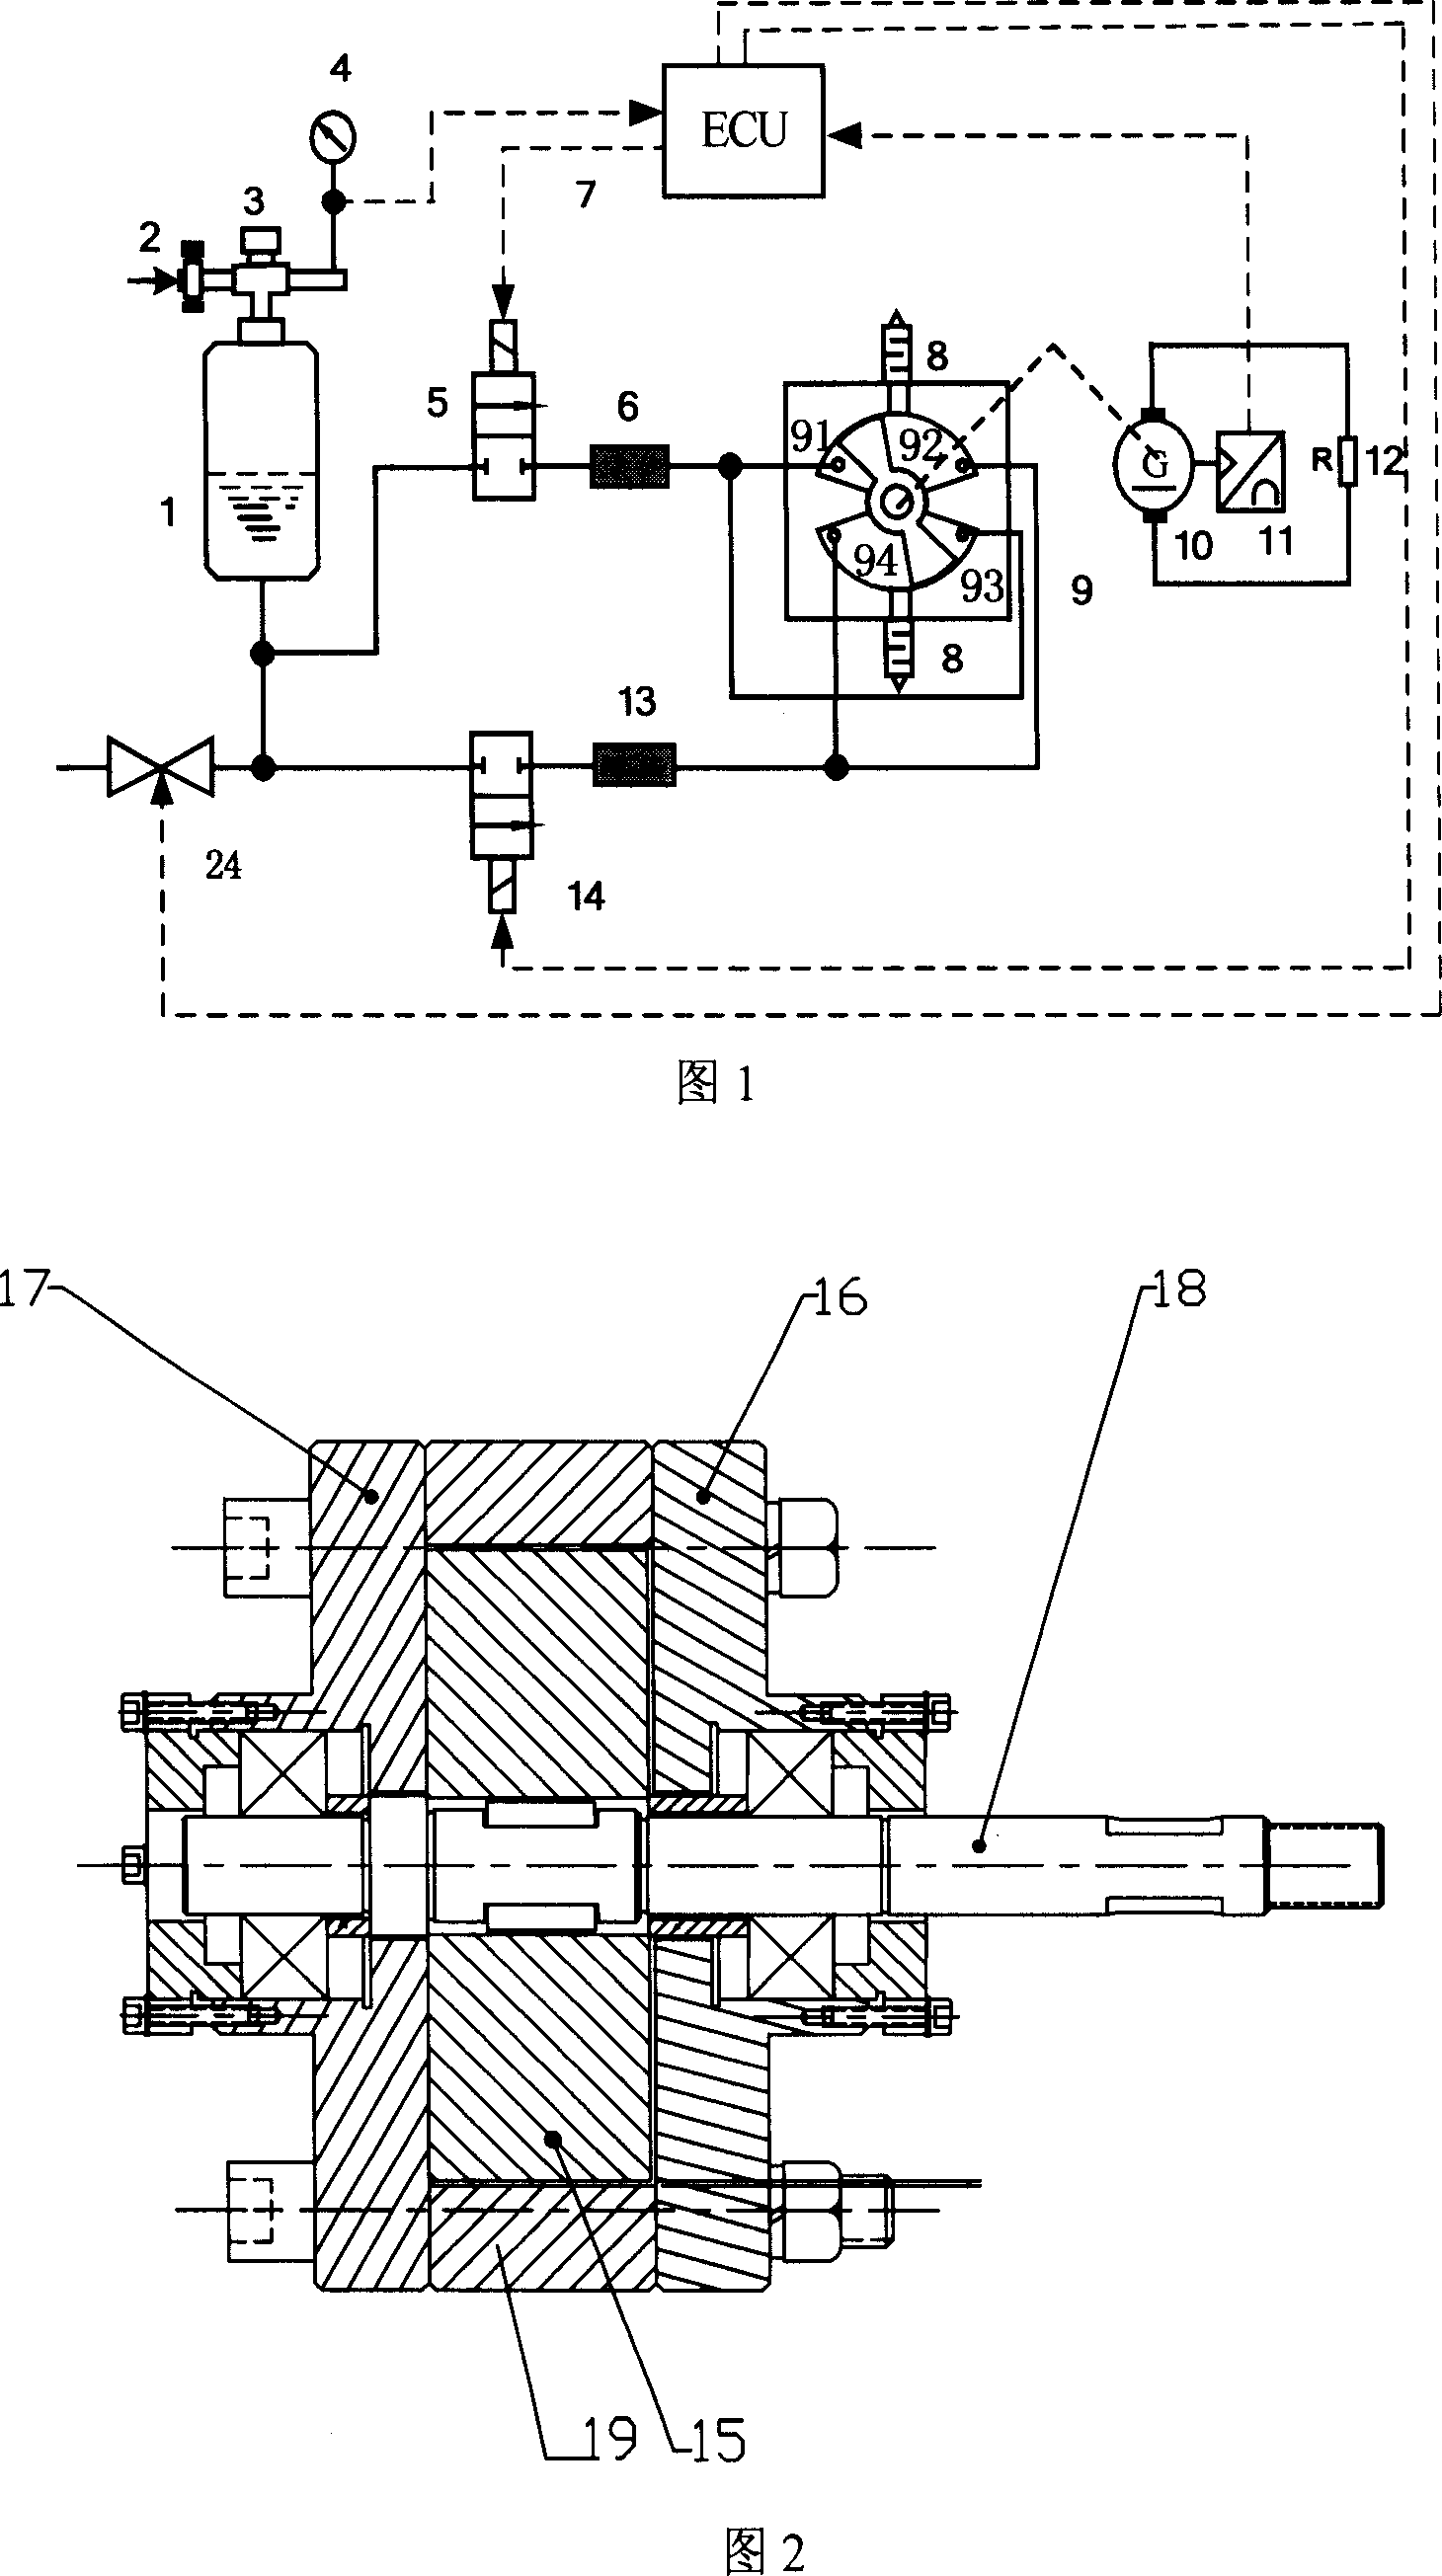 Direct injection pendulum type monopropellant engine